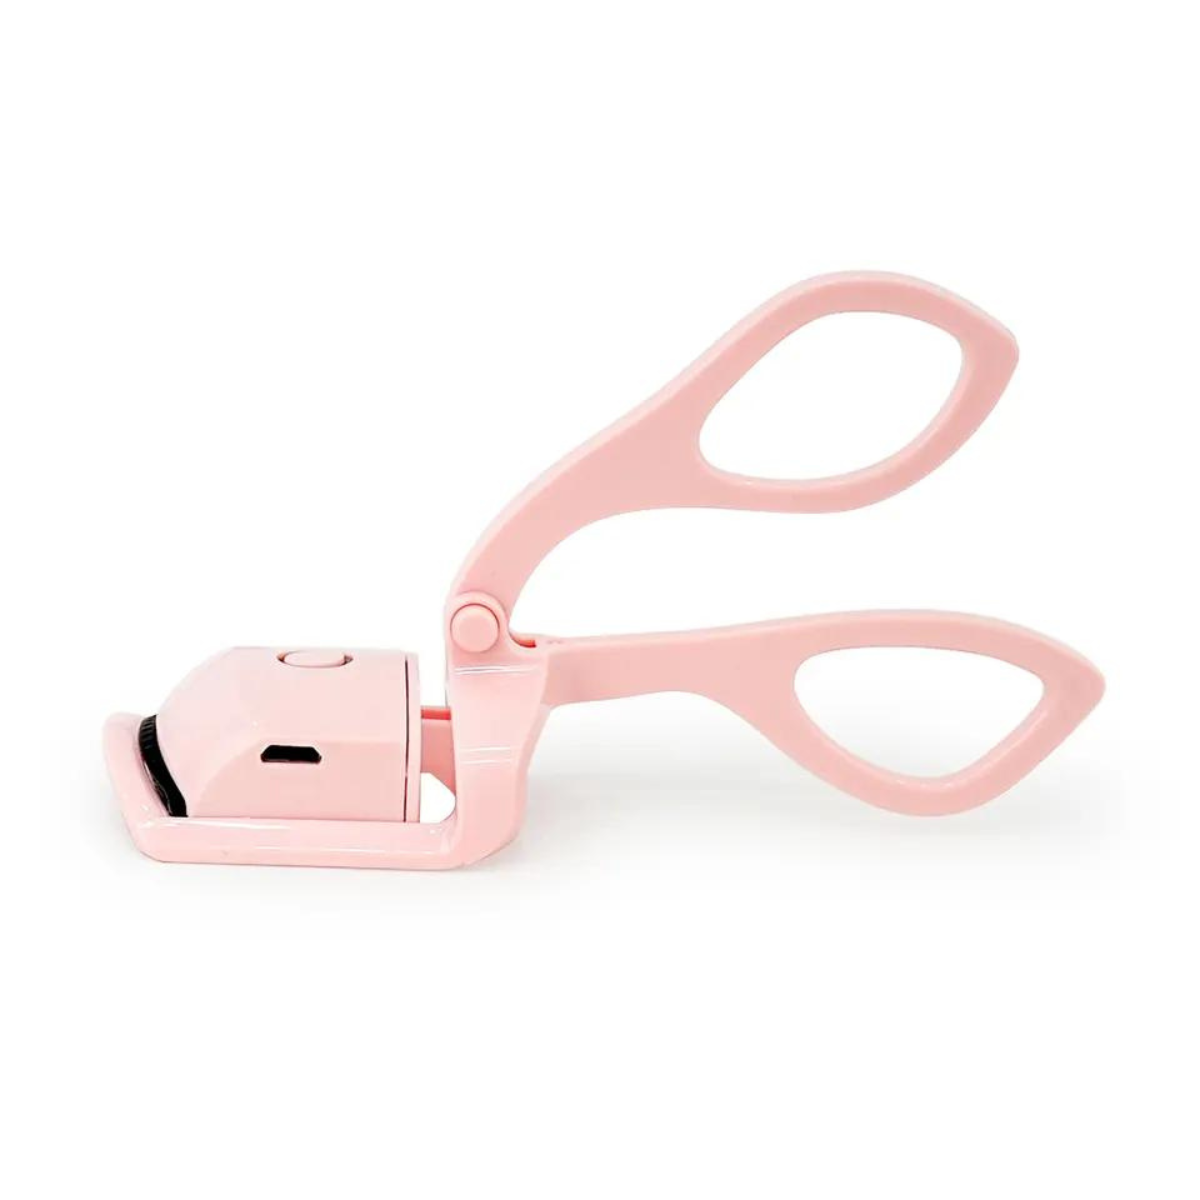 Curlio - Heated Eyelash Curler Pink